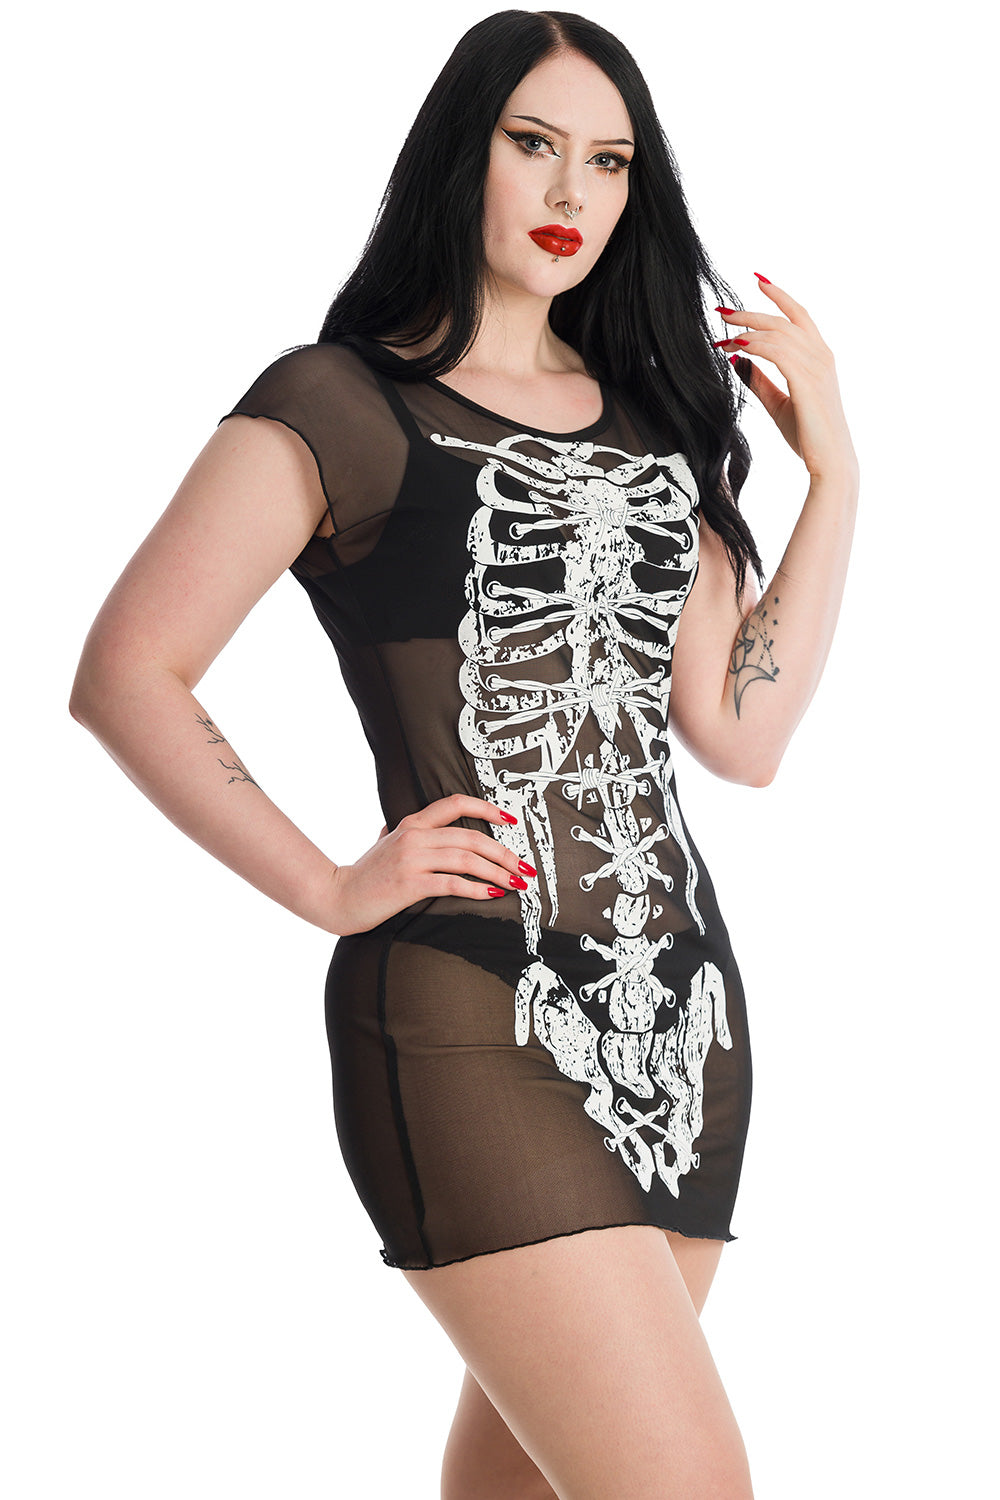 Alternative model wearing black sheer mini dress with white skeleton print. 